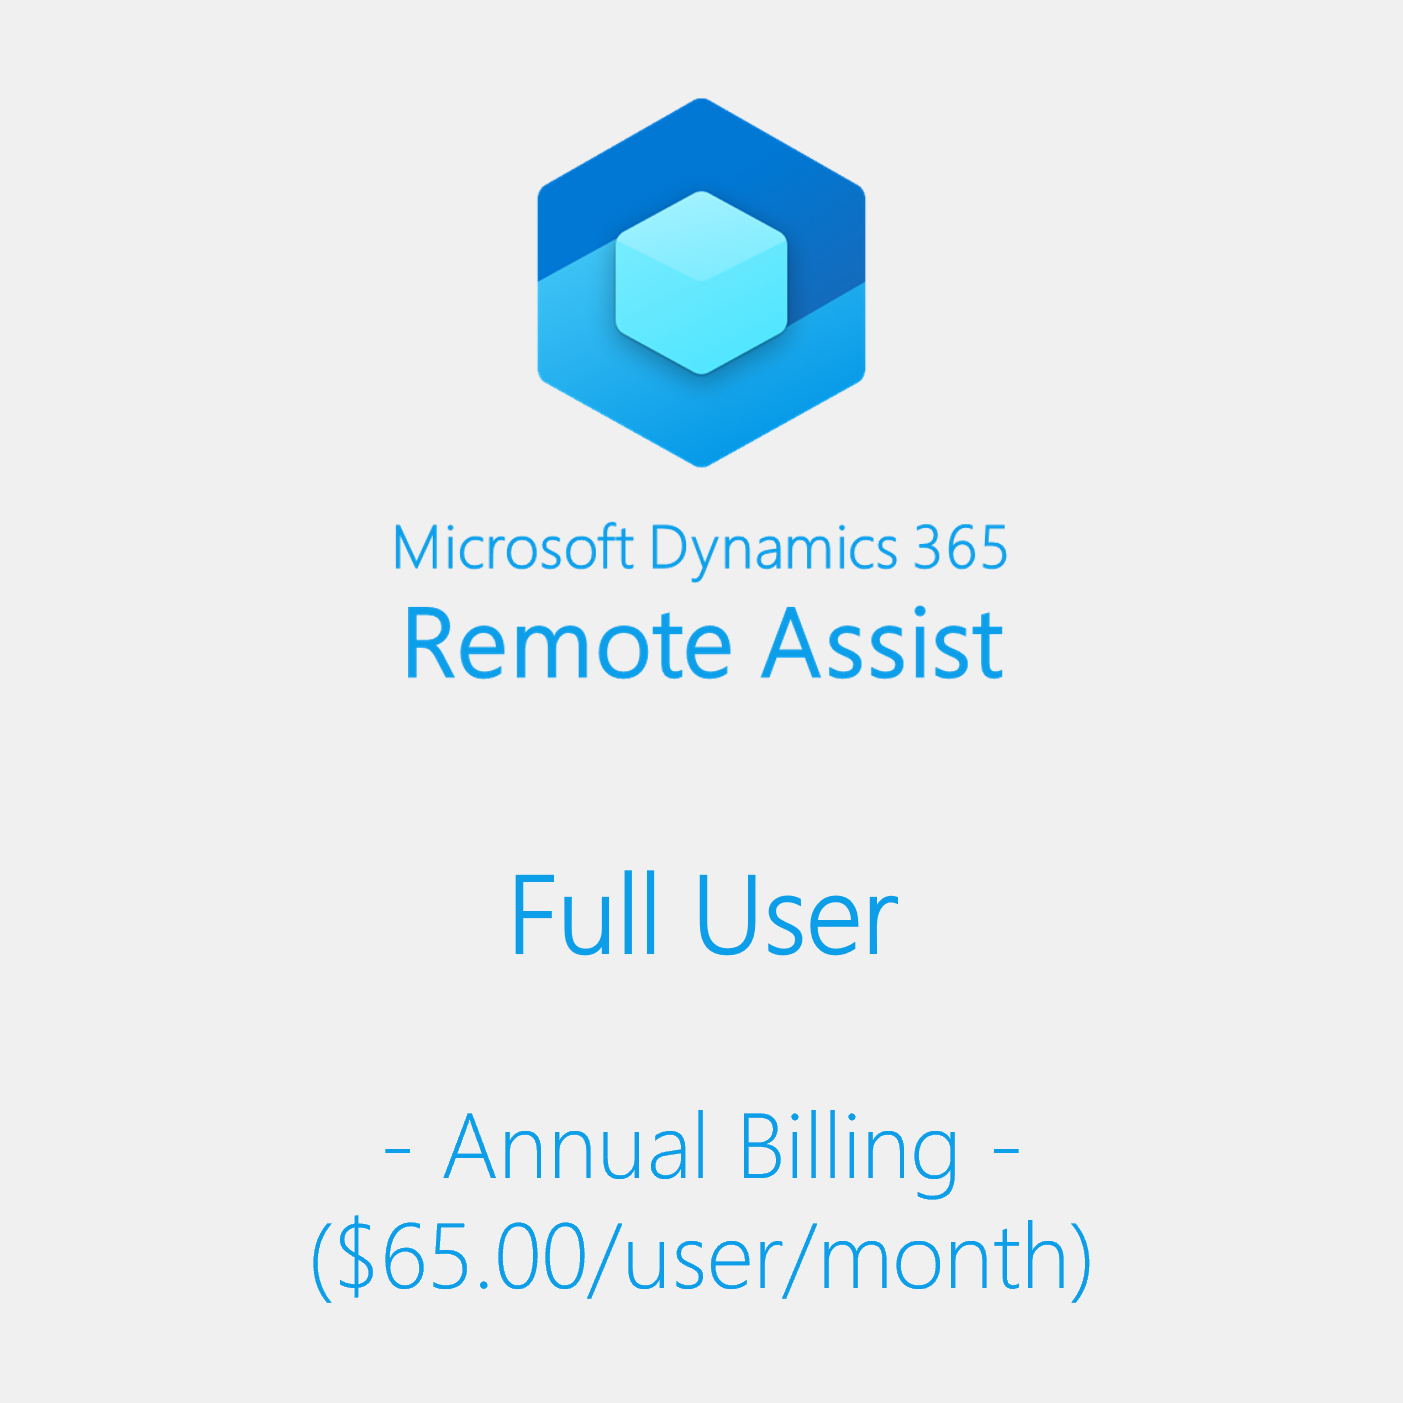 Dynamics 365 Remote Assist